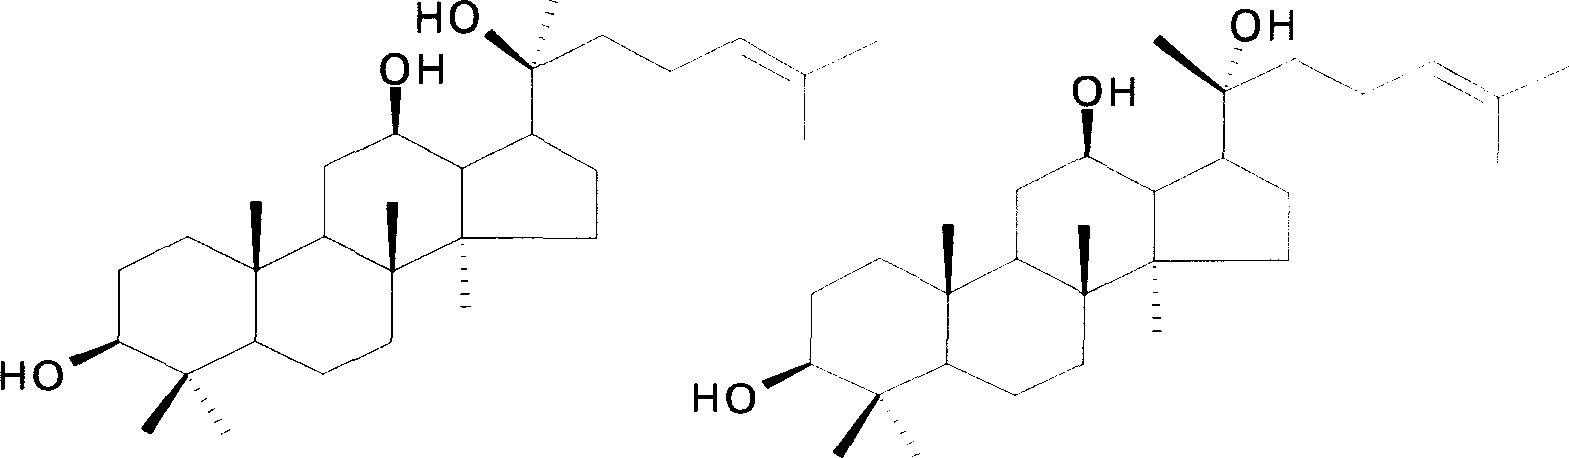 Use of 20(S)-protopanoxadiol in preparation of anti-bowelcancer medicine